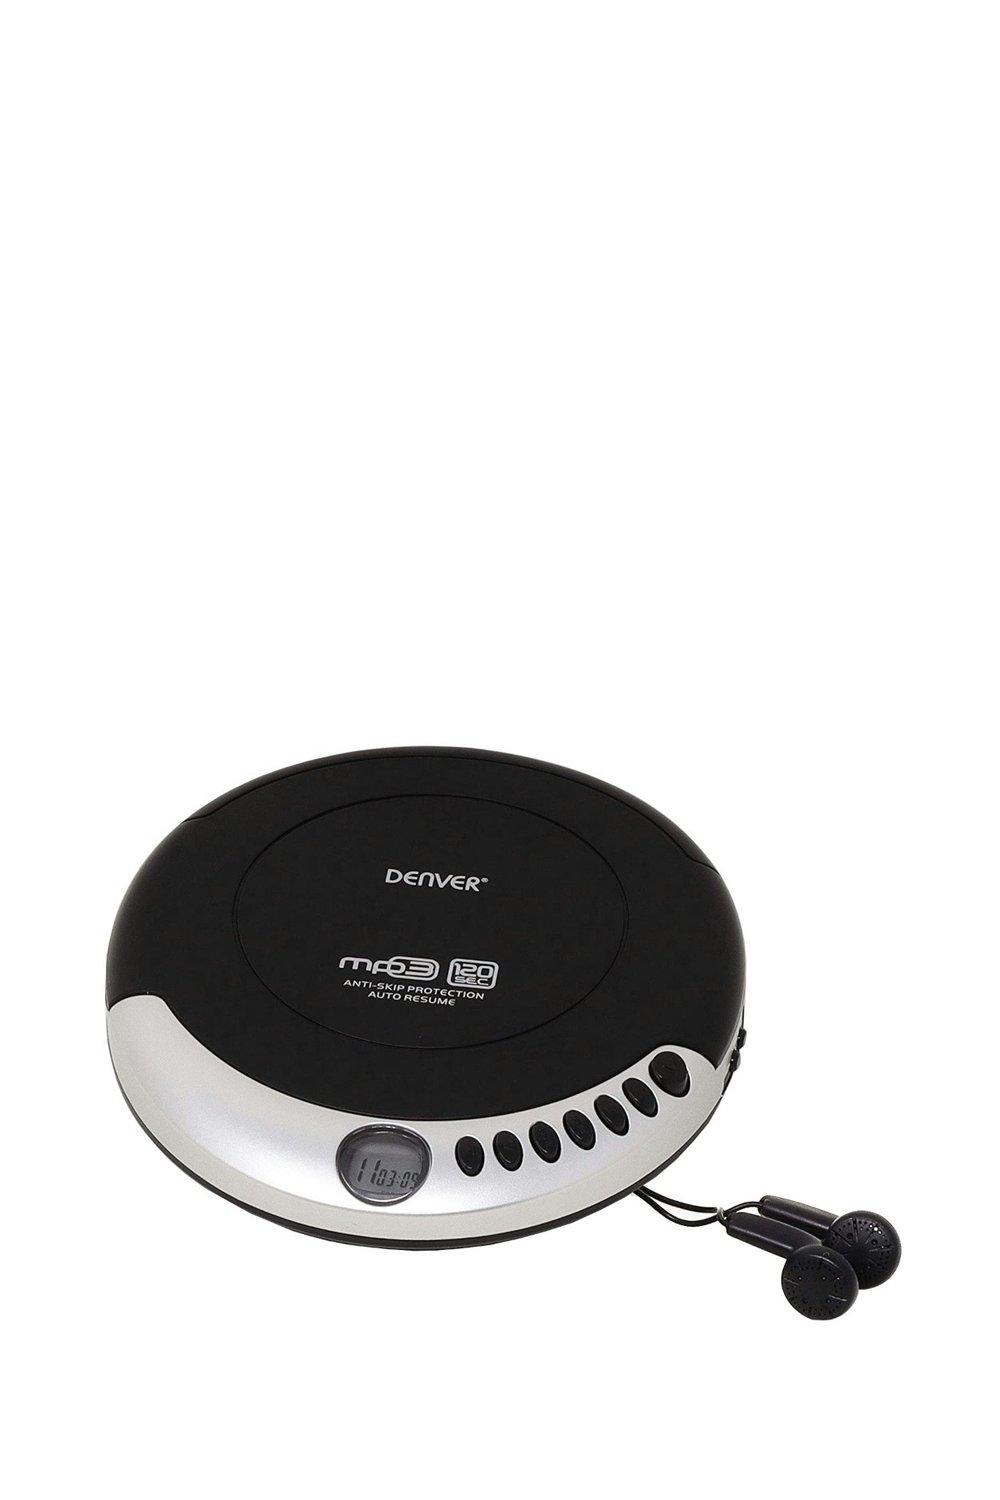 Denver 'DMP-391' Personal CD Player Discman With MP3 & Bass Boost|black